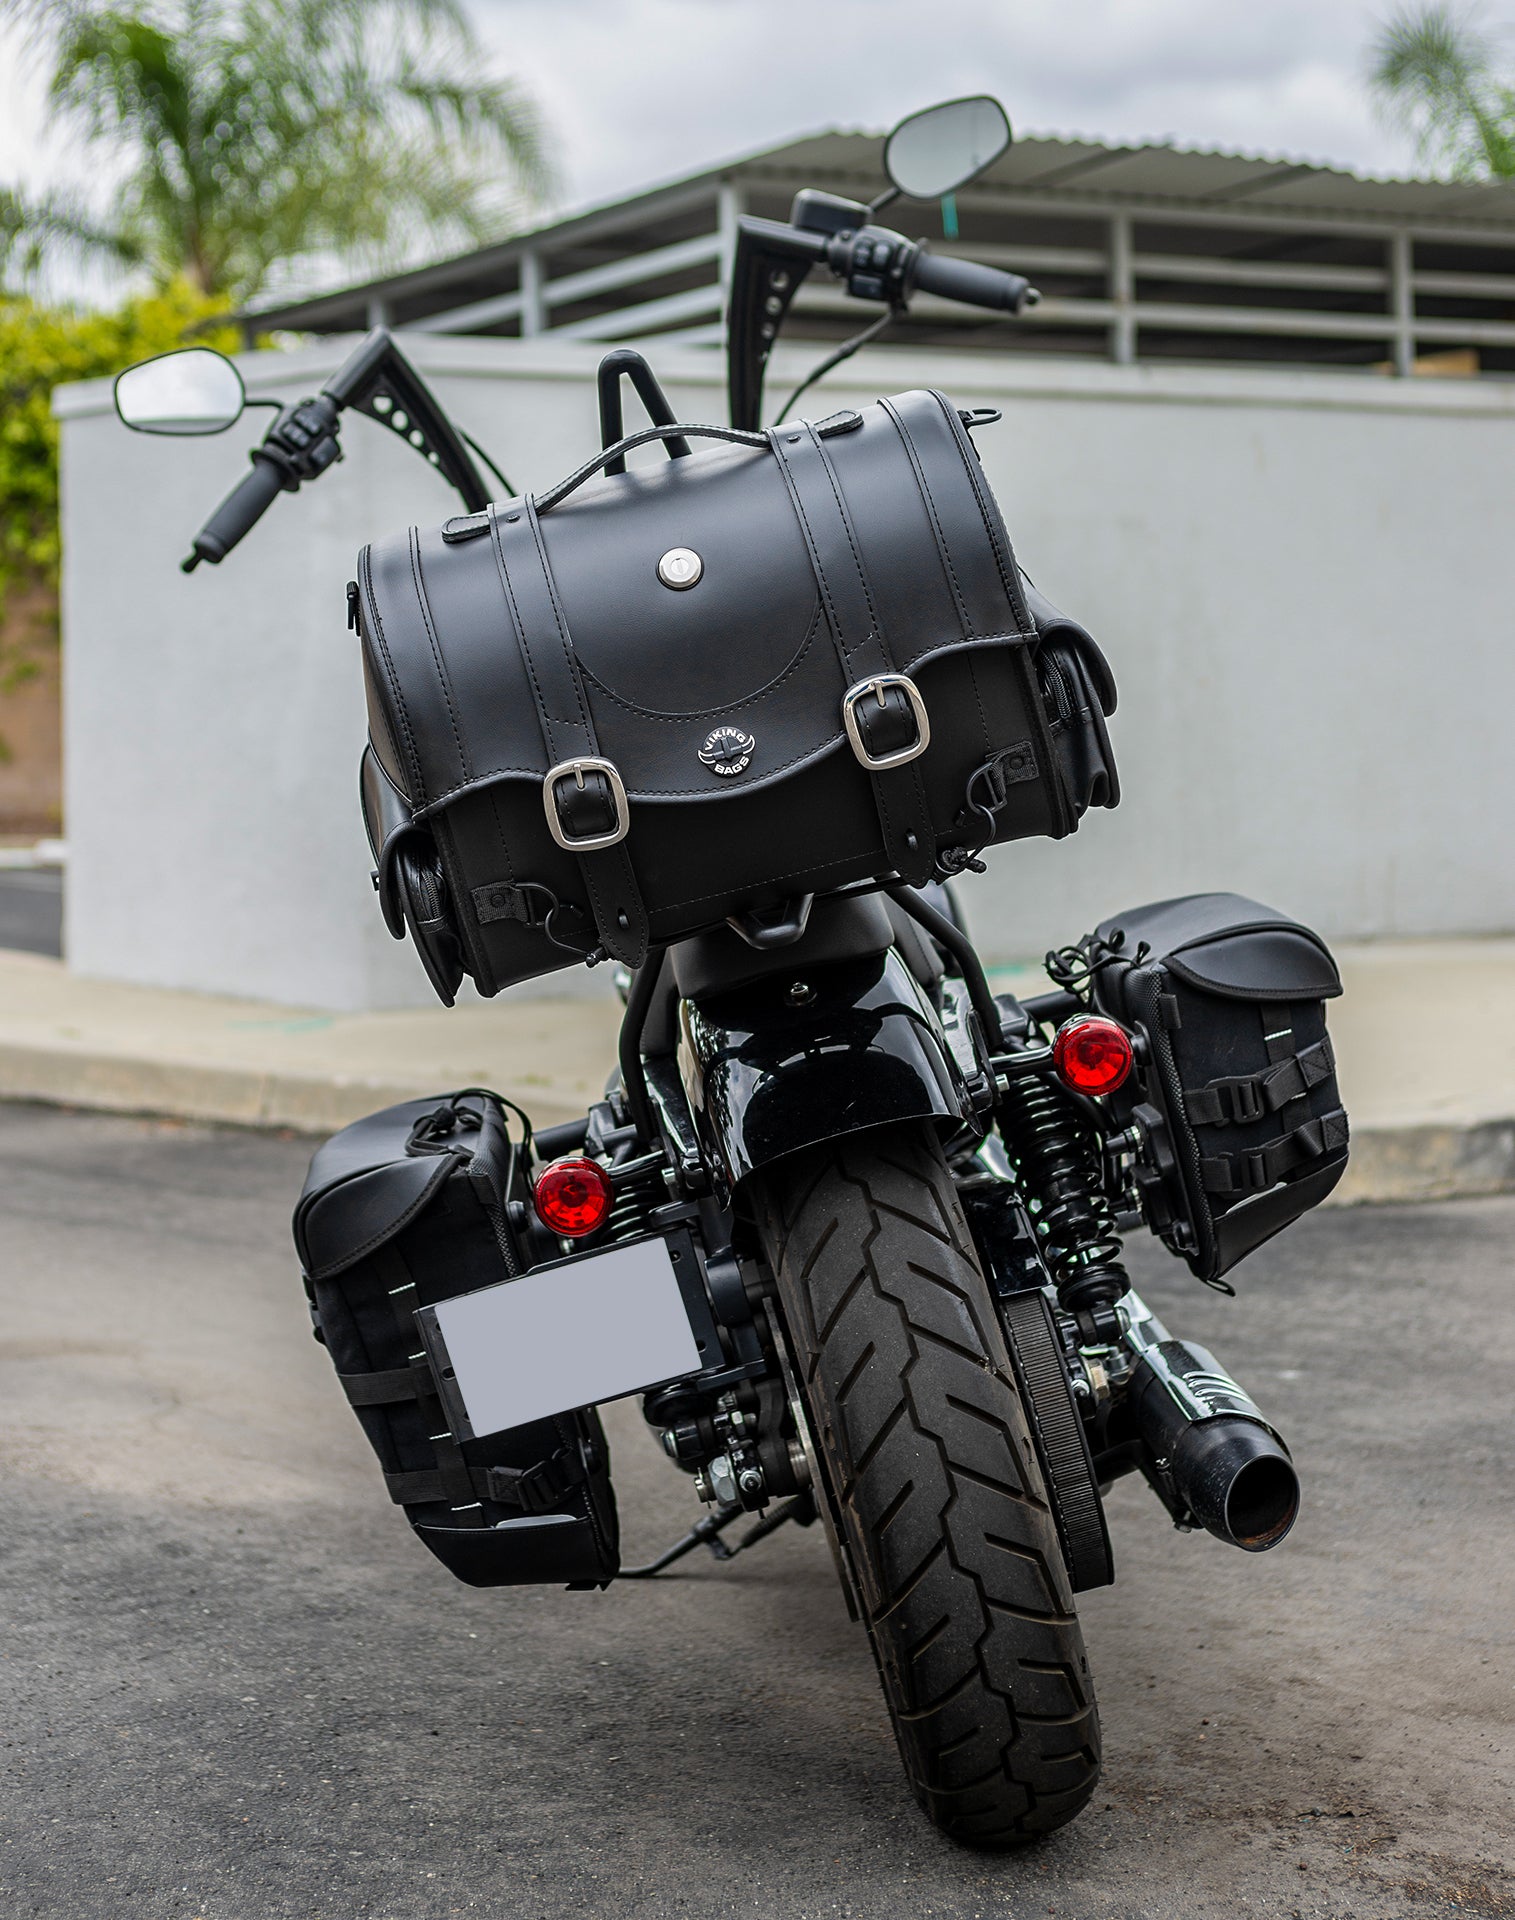 18L - Century Medium BMW Leather Motorcycle Sissy Bar Bag